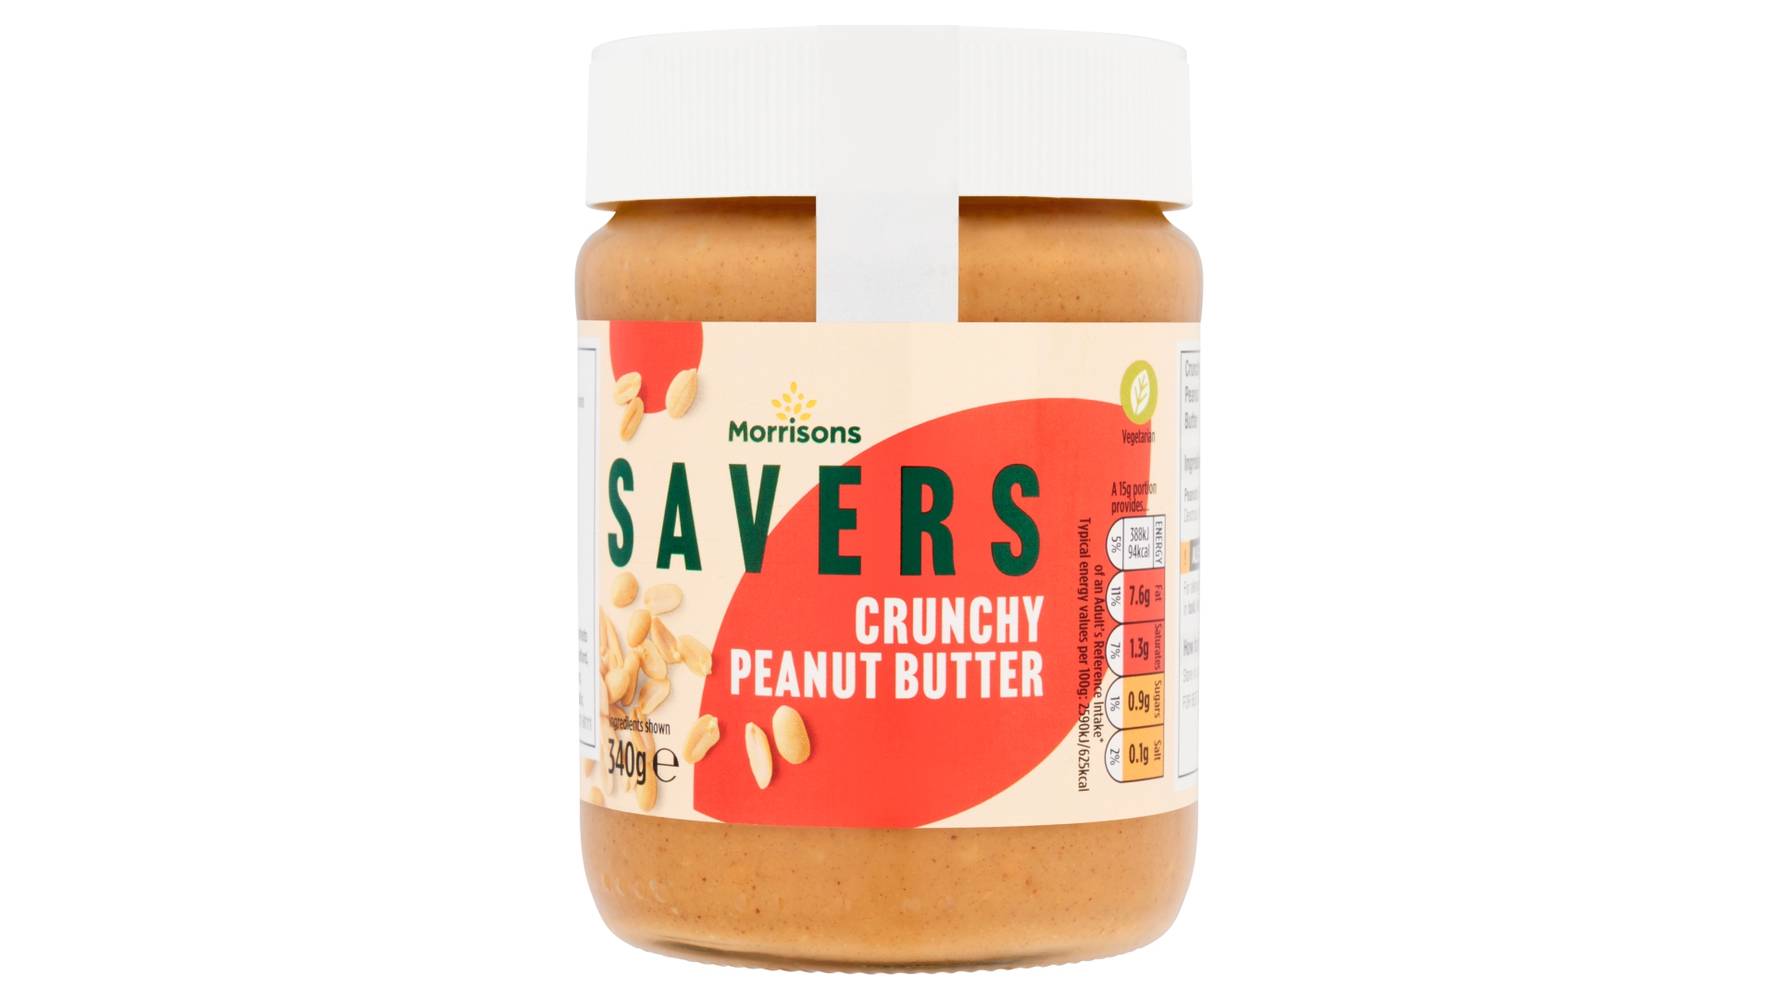 Morrisons Savers Crunchy Peanut Butter 340g